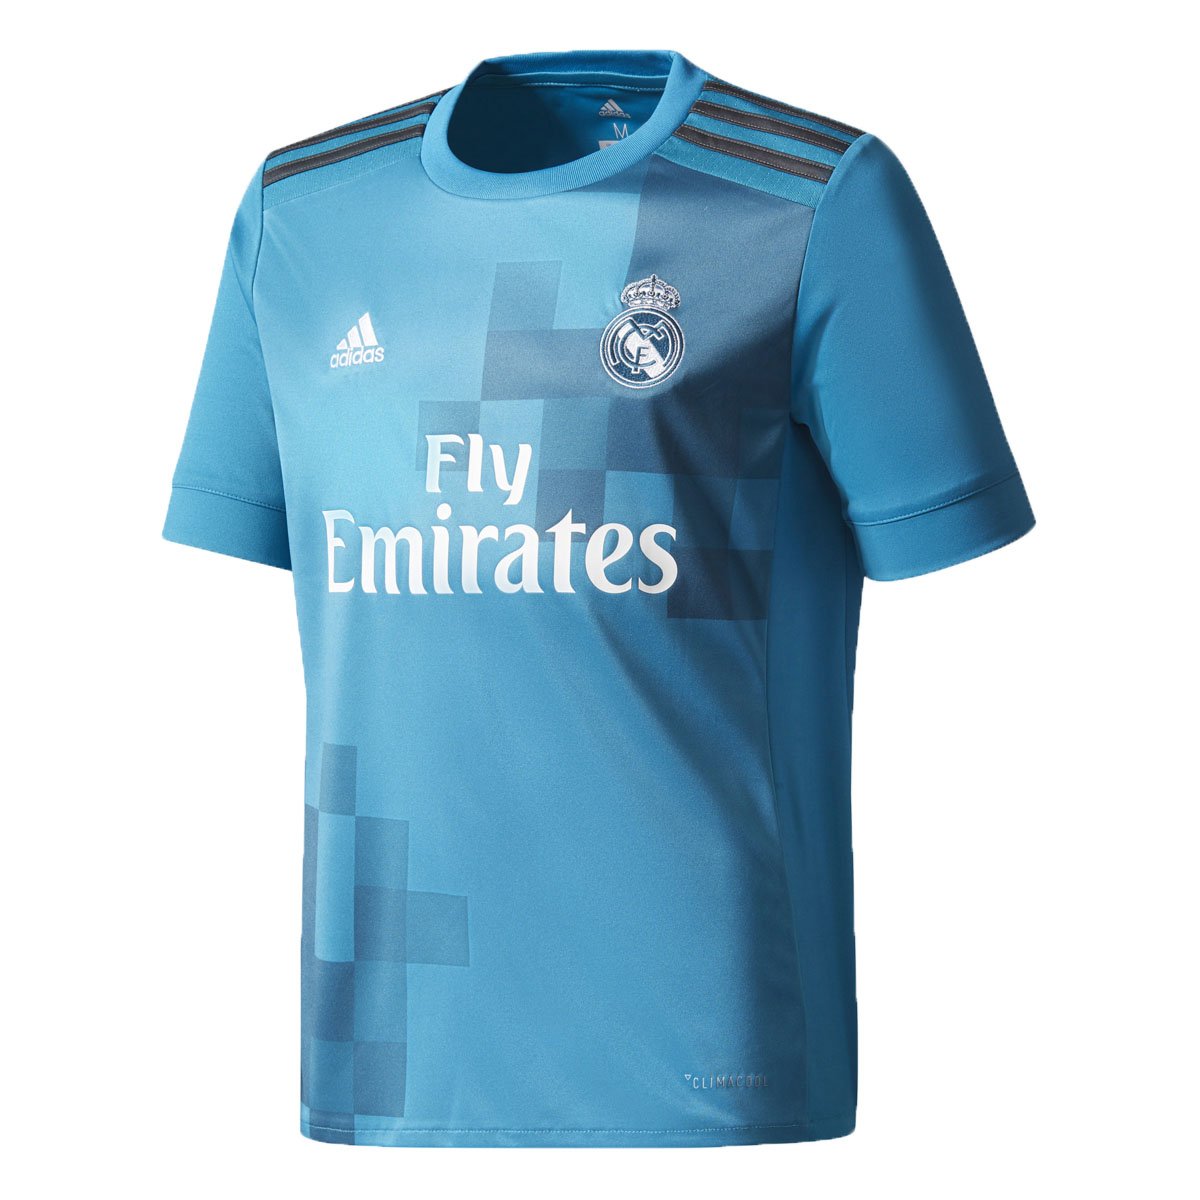 Jersey Real Madrid Tercero / Replica Adidas - Caballero